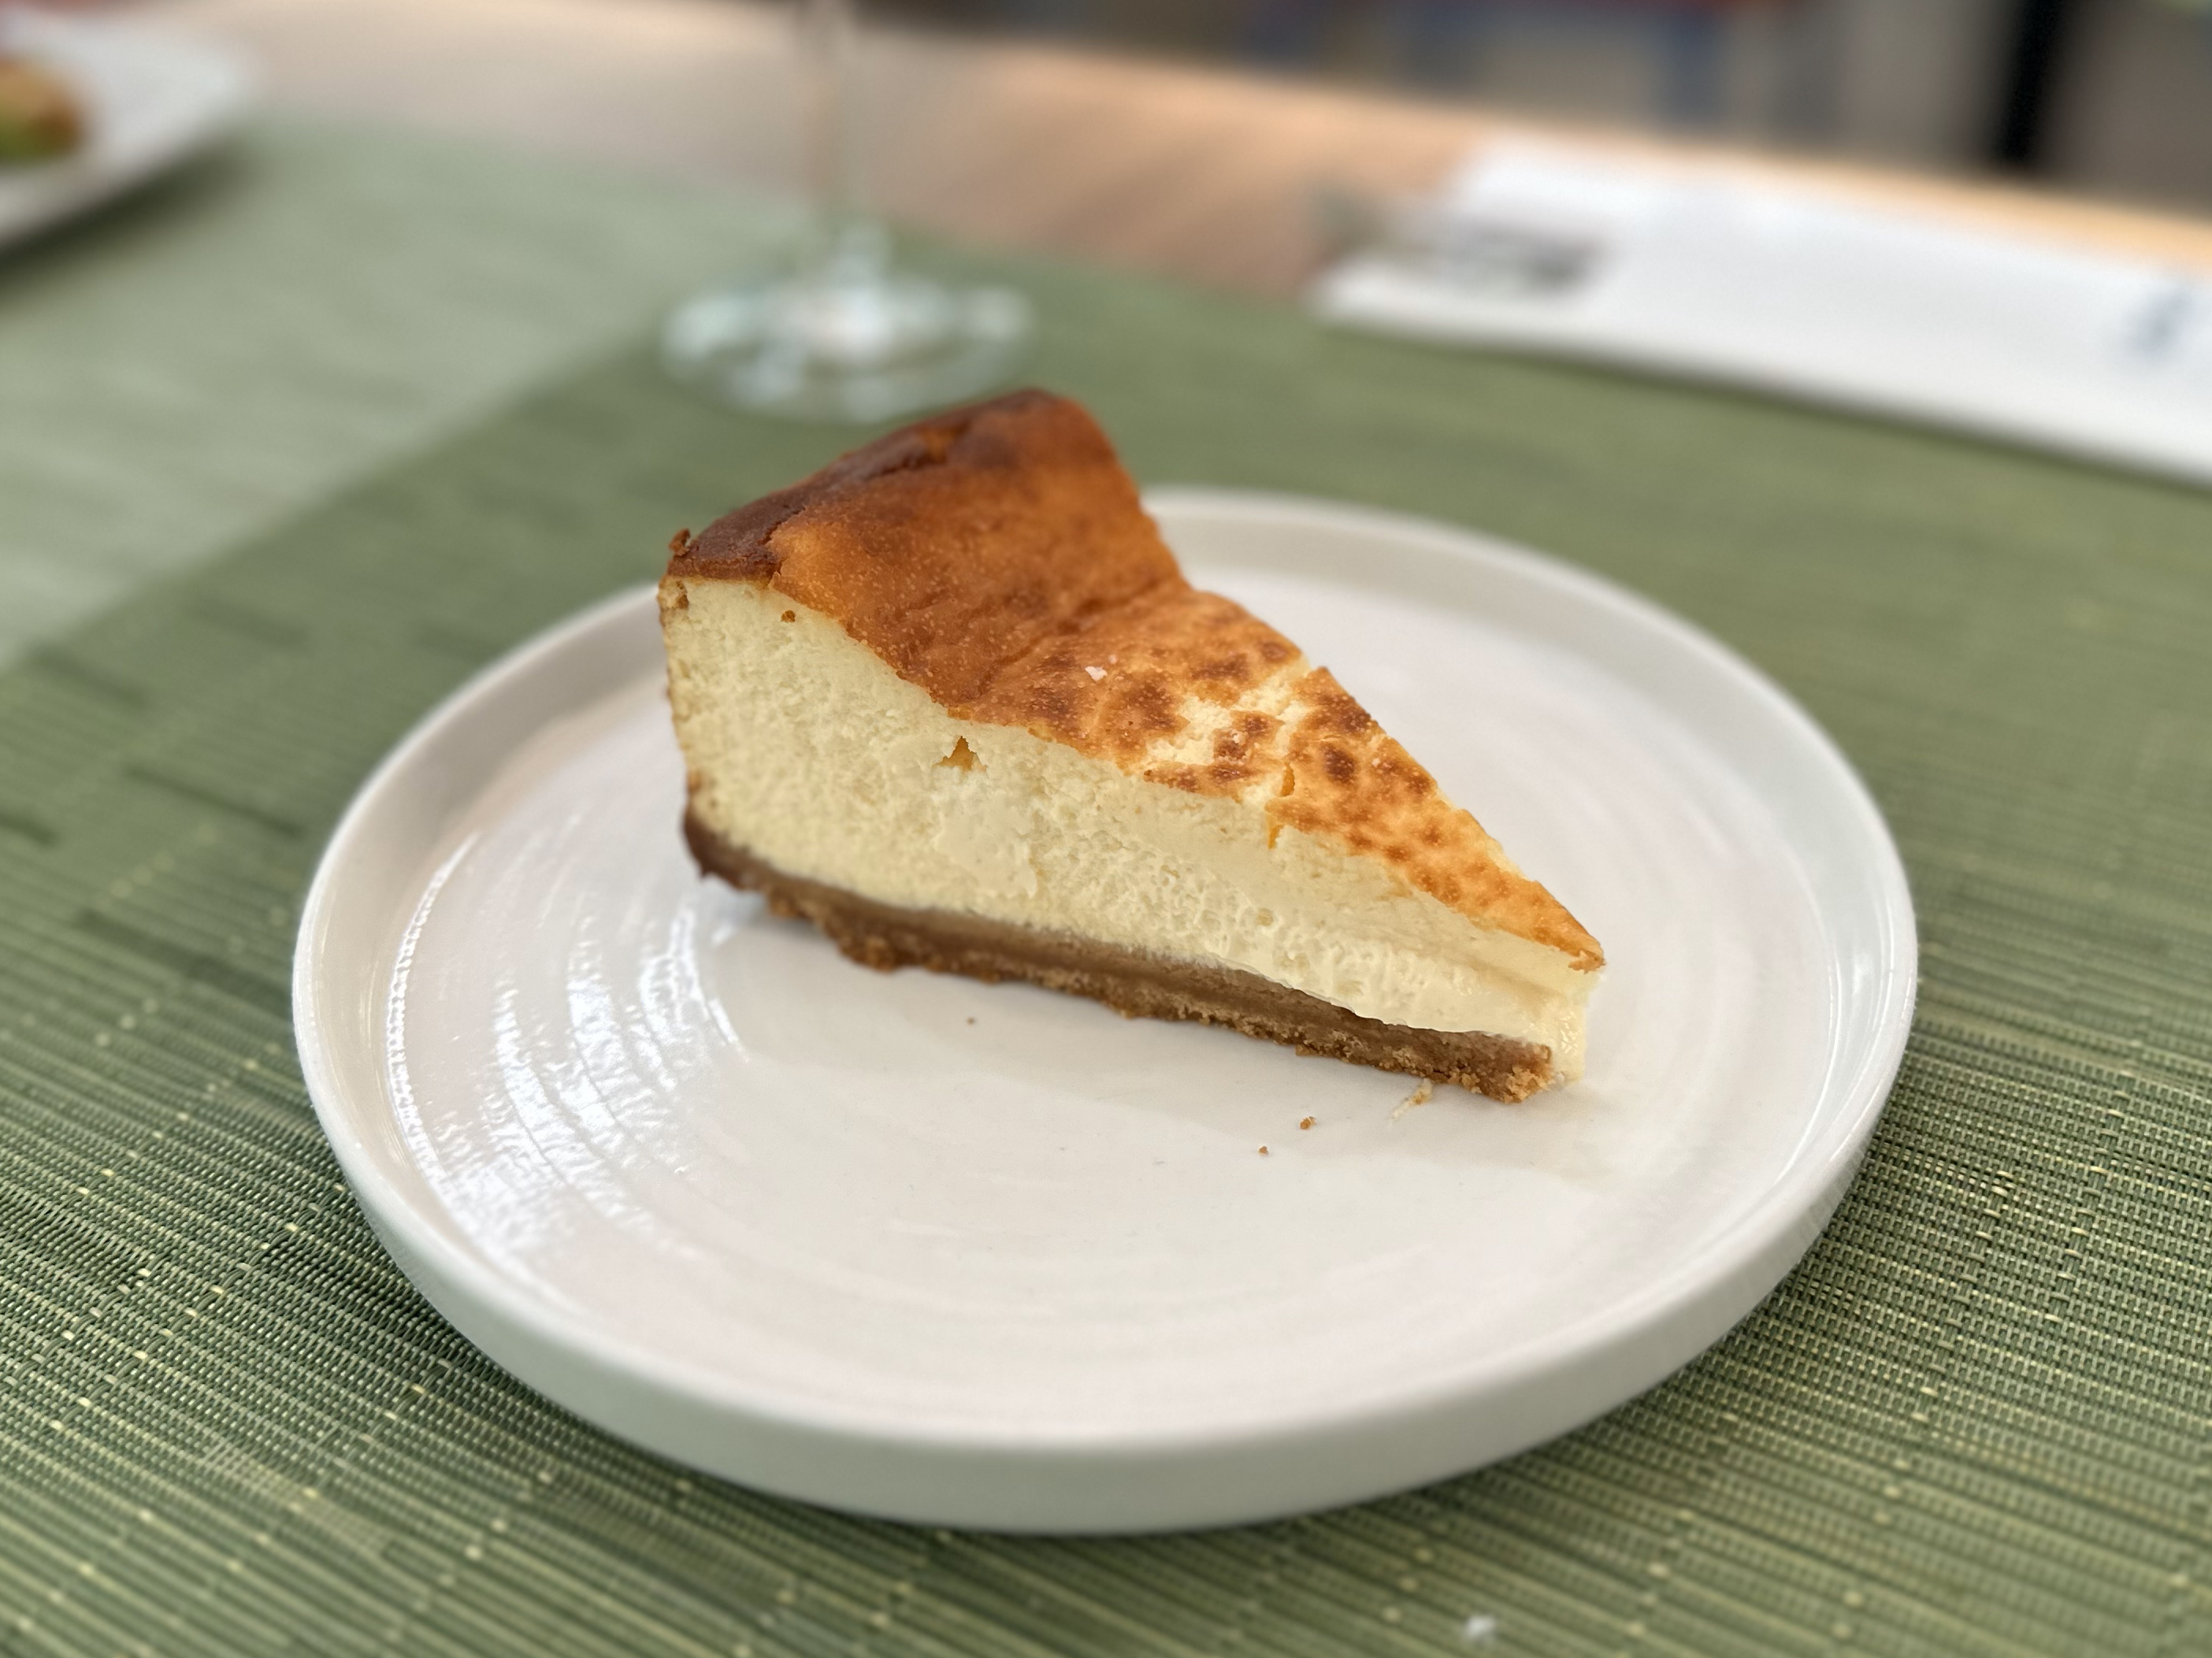 Creamy cheesecake